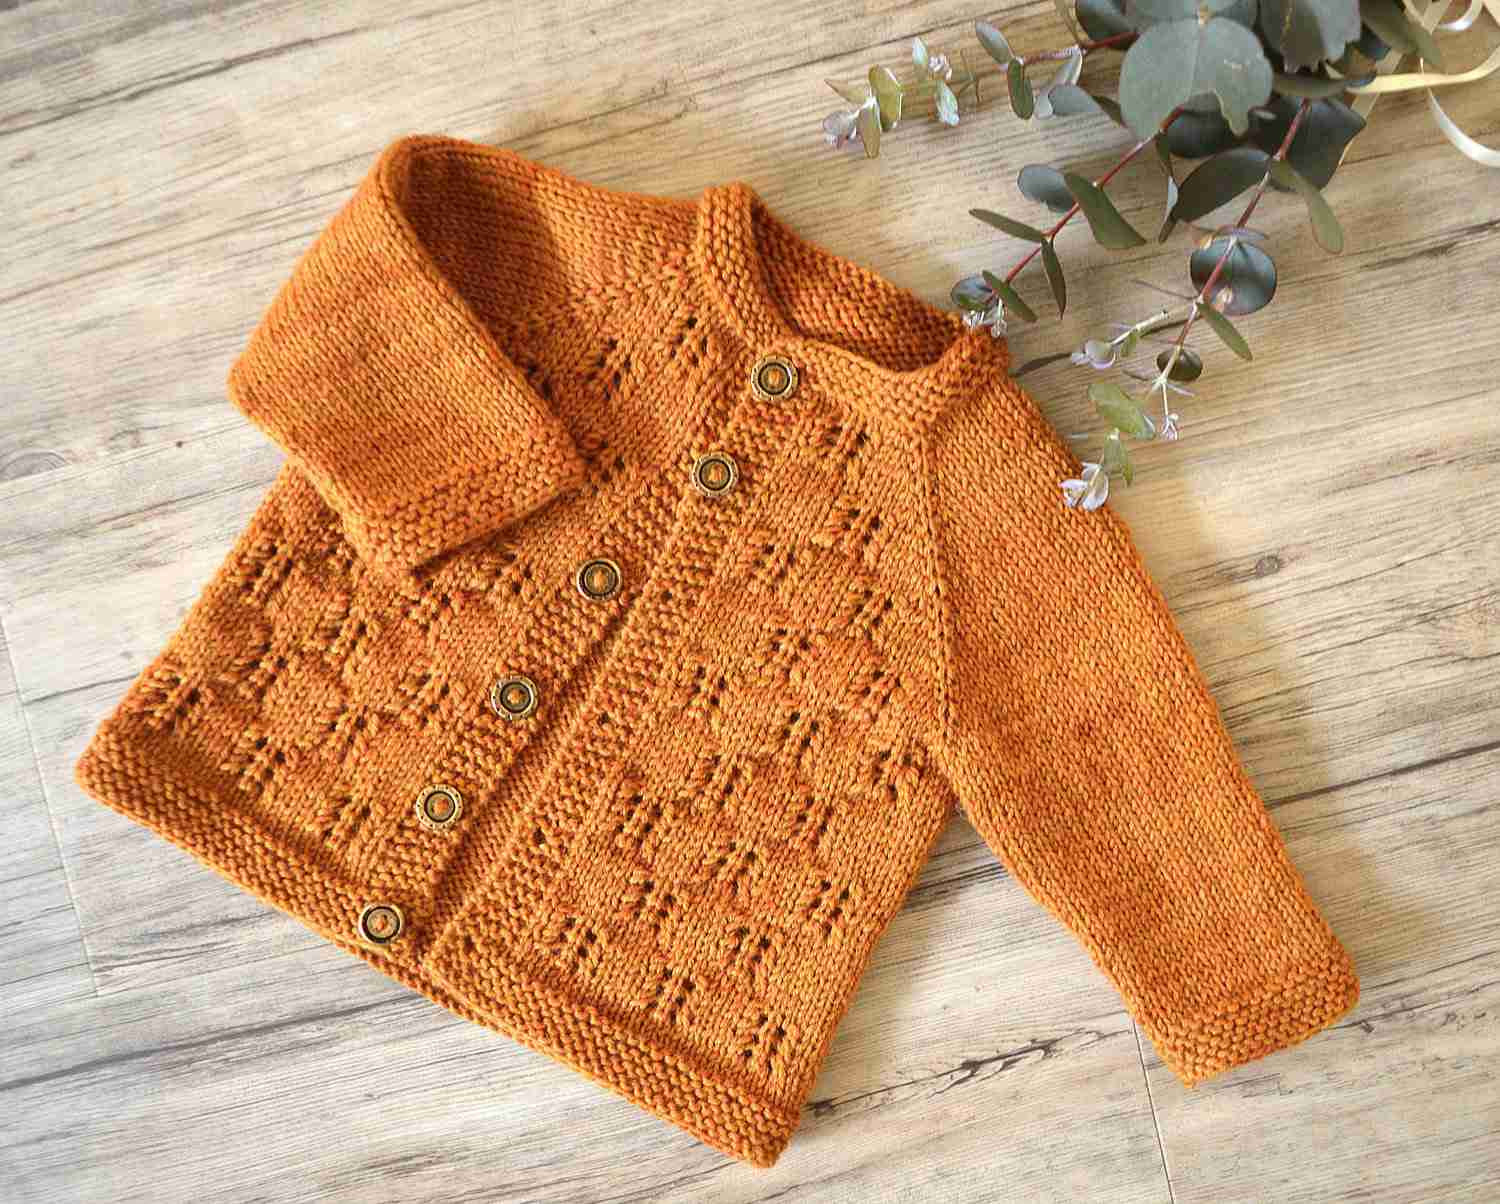 Free Uk Baby Knitting Patterns Free 4 Ply Ba Knitting Patterns Uk Awesome 25 Best Knitting